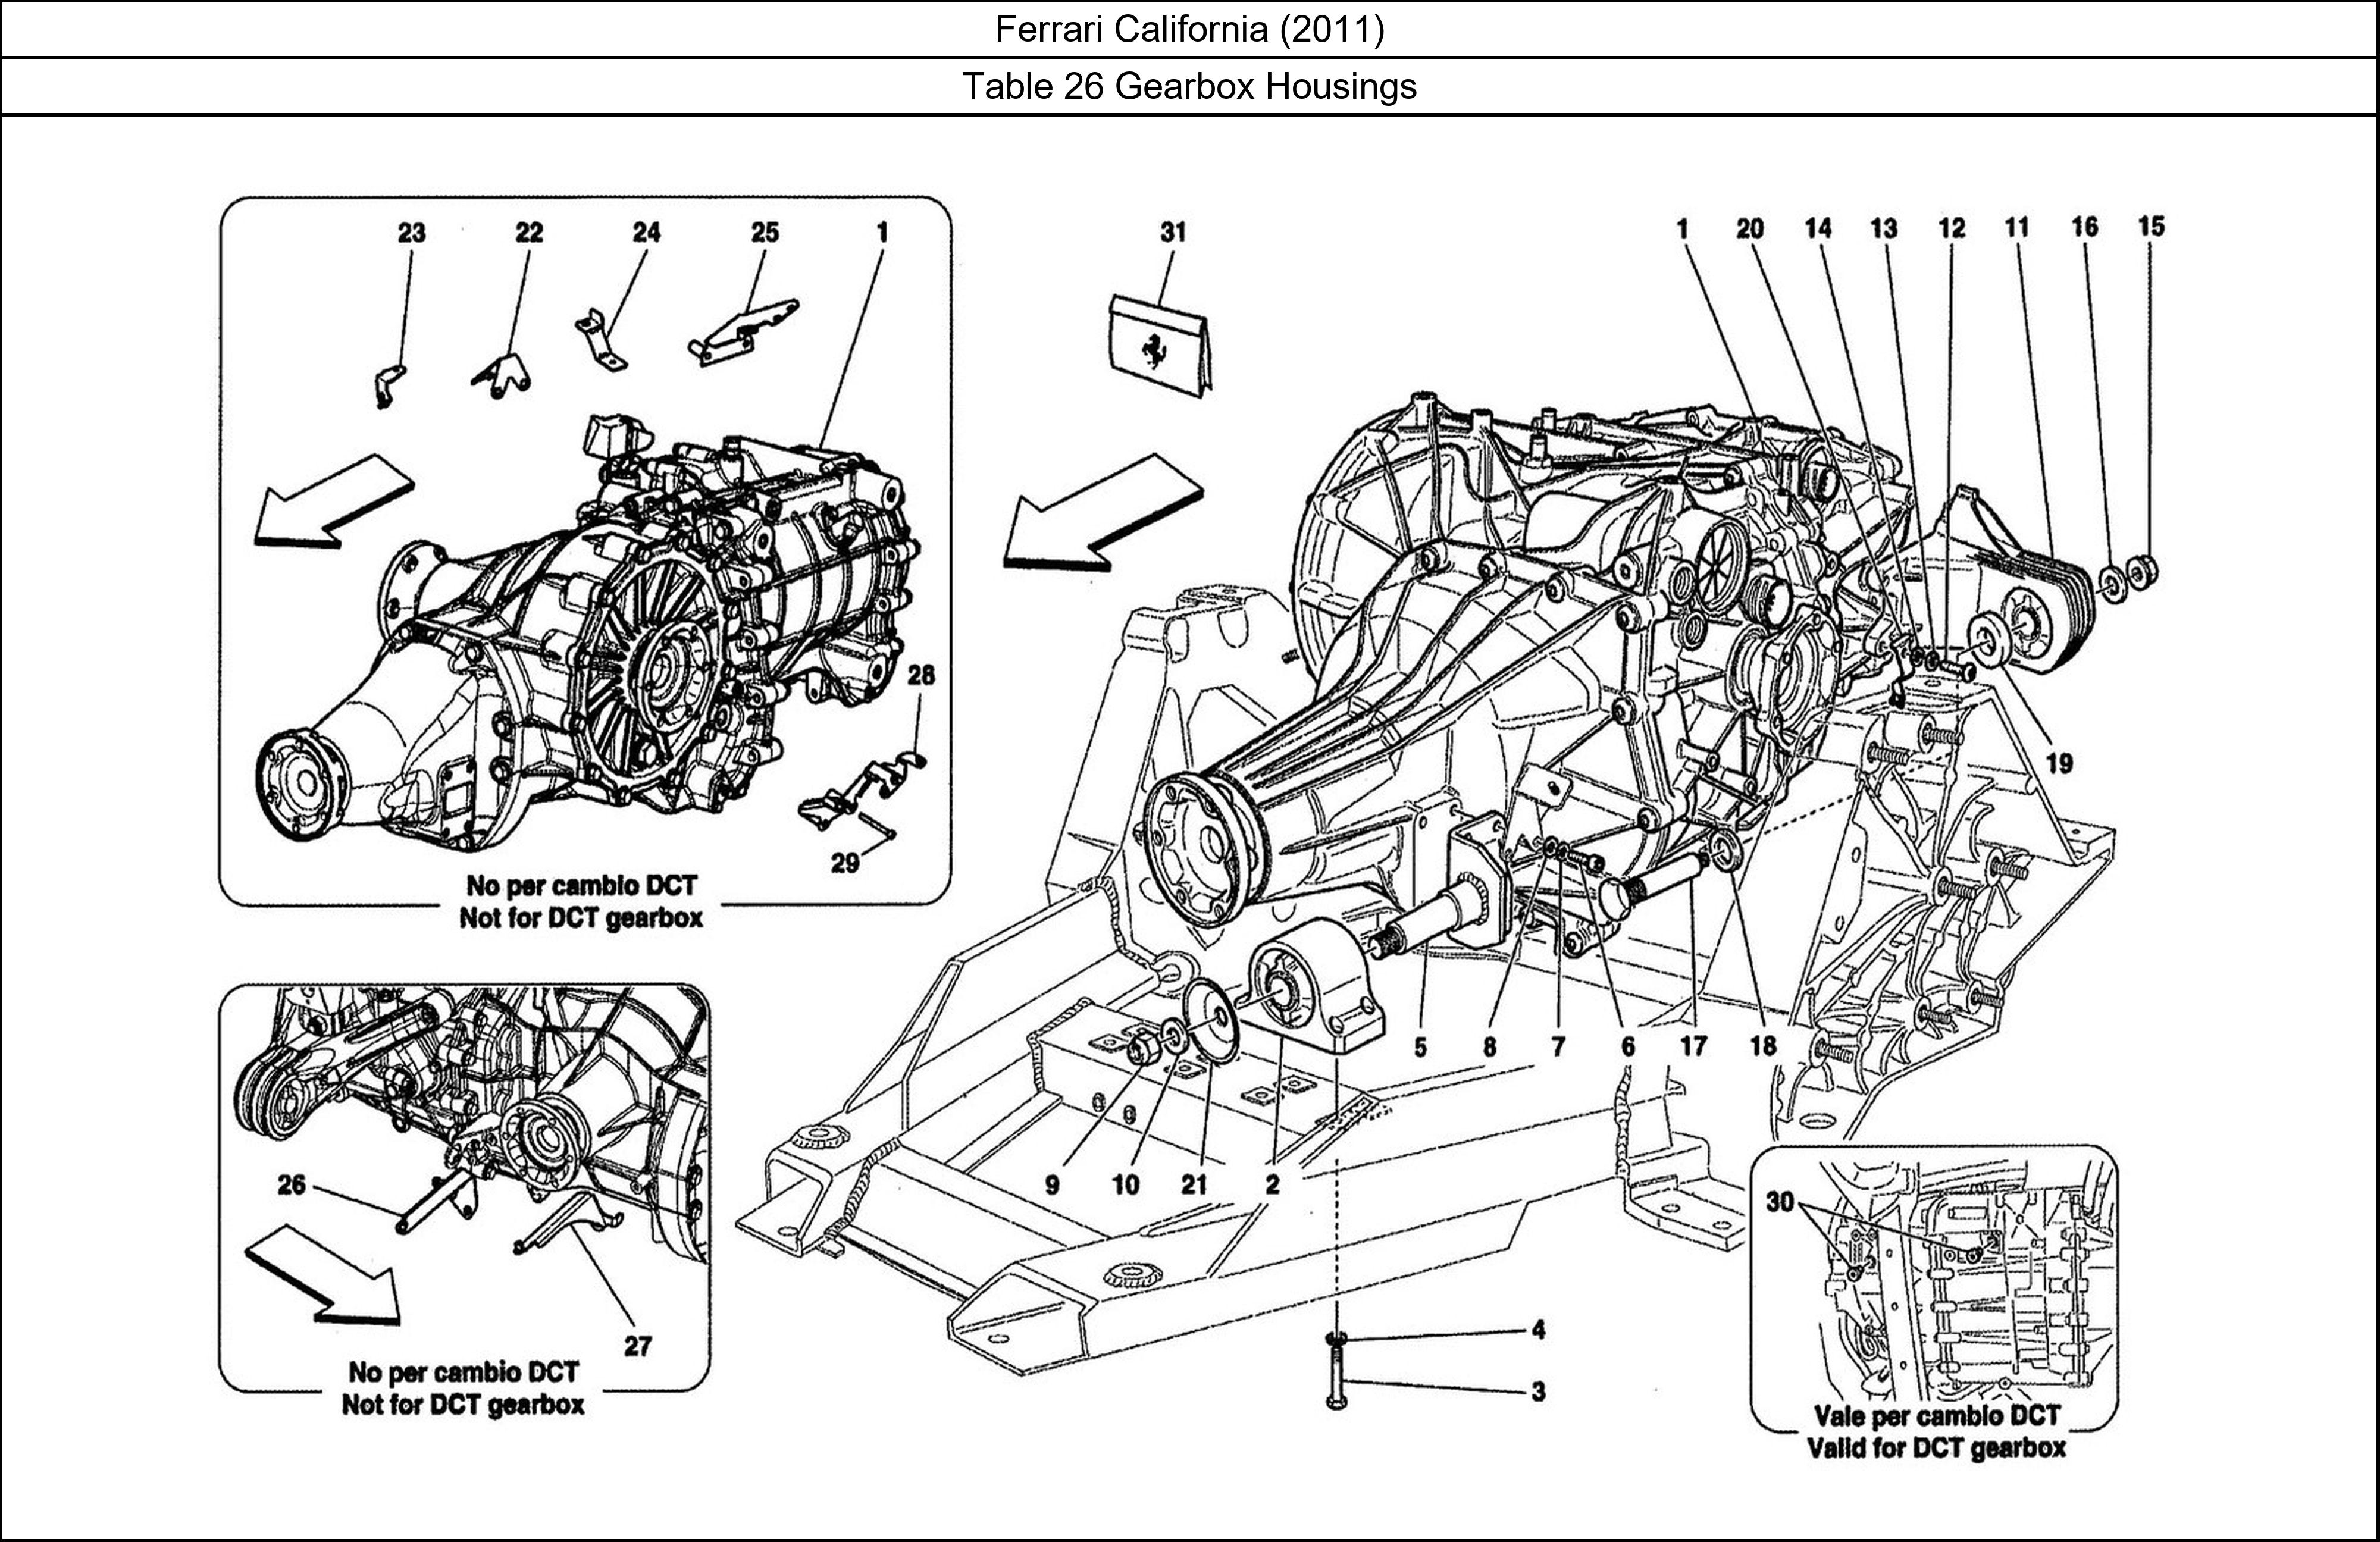 Ferrari Parts Ferrari California (2011) Table 26 Gearbox Housings